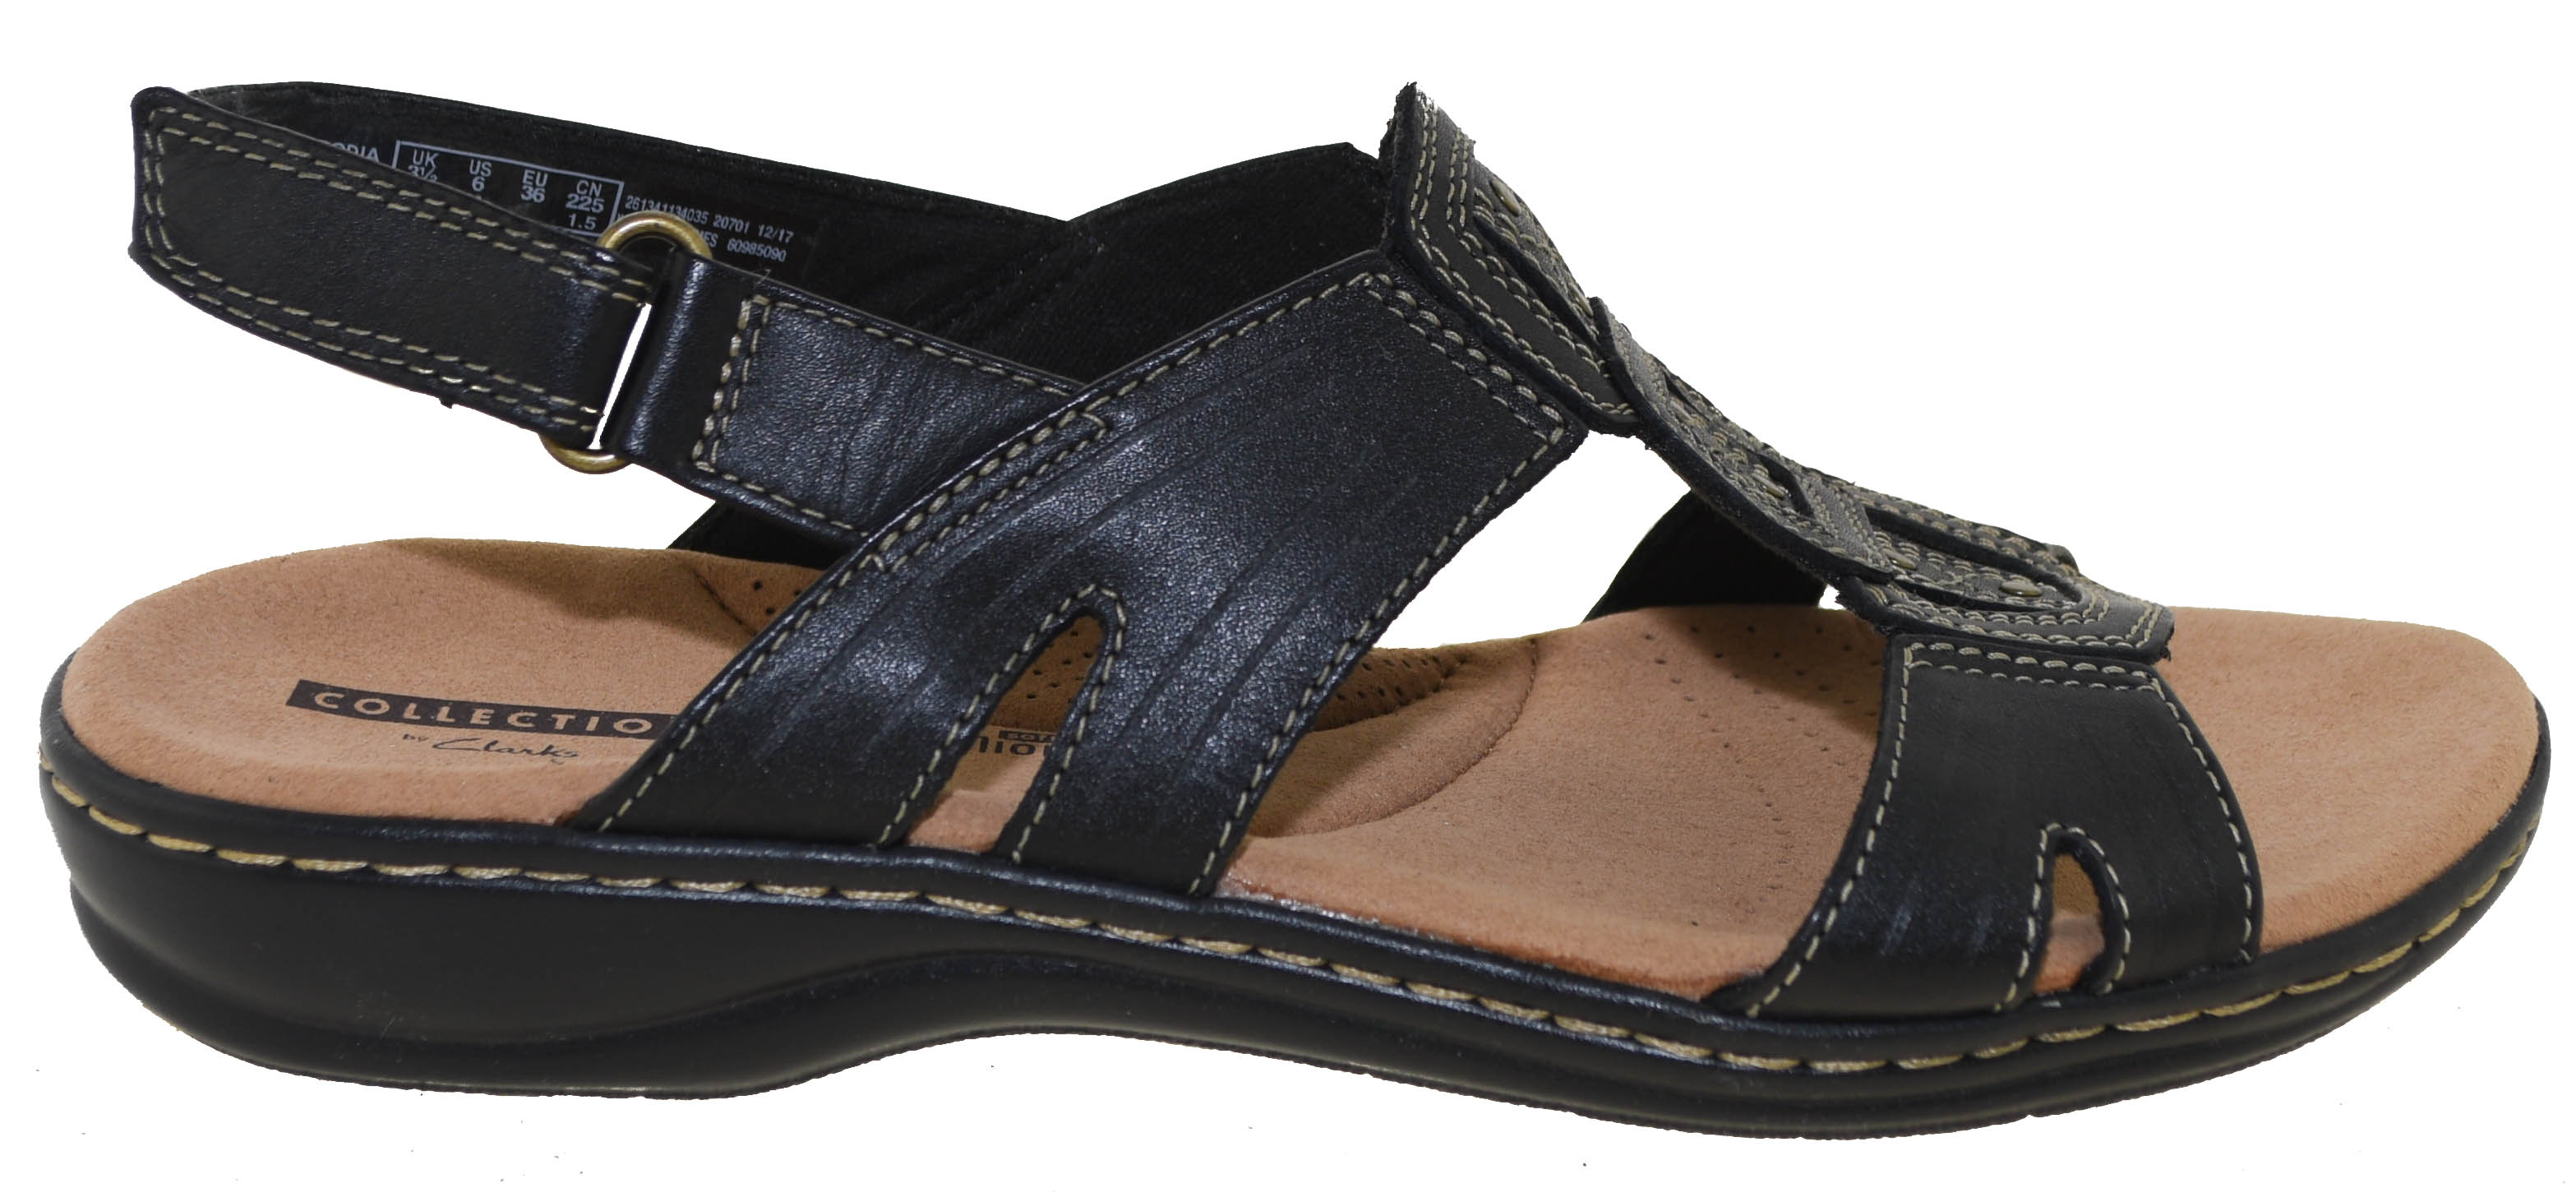 Clarks Women's Leisa Vine Platform Sandal Black Leather Style 34113 | eBay